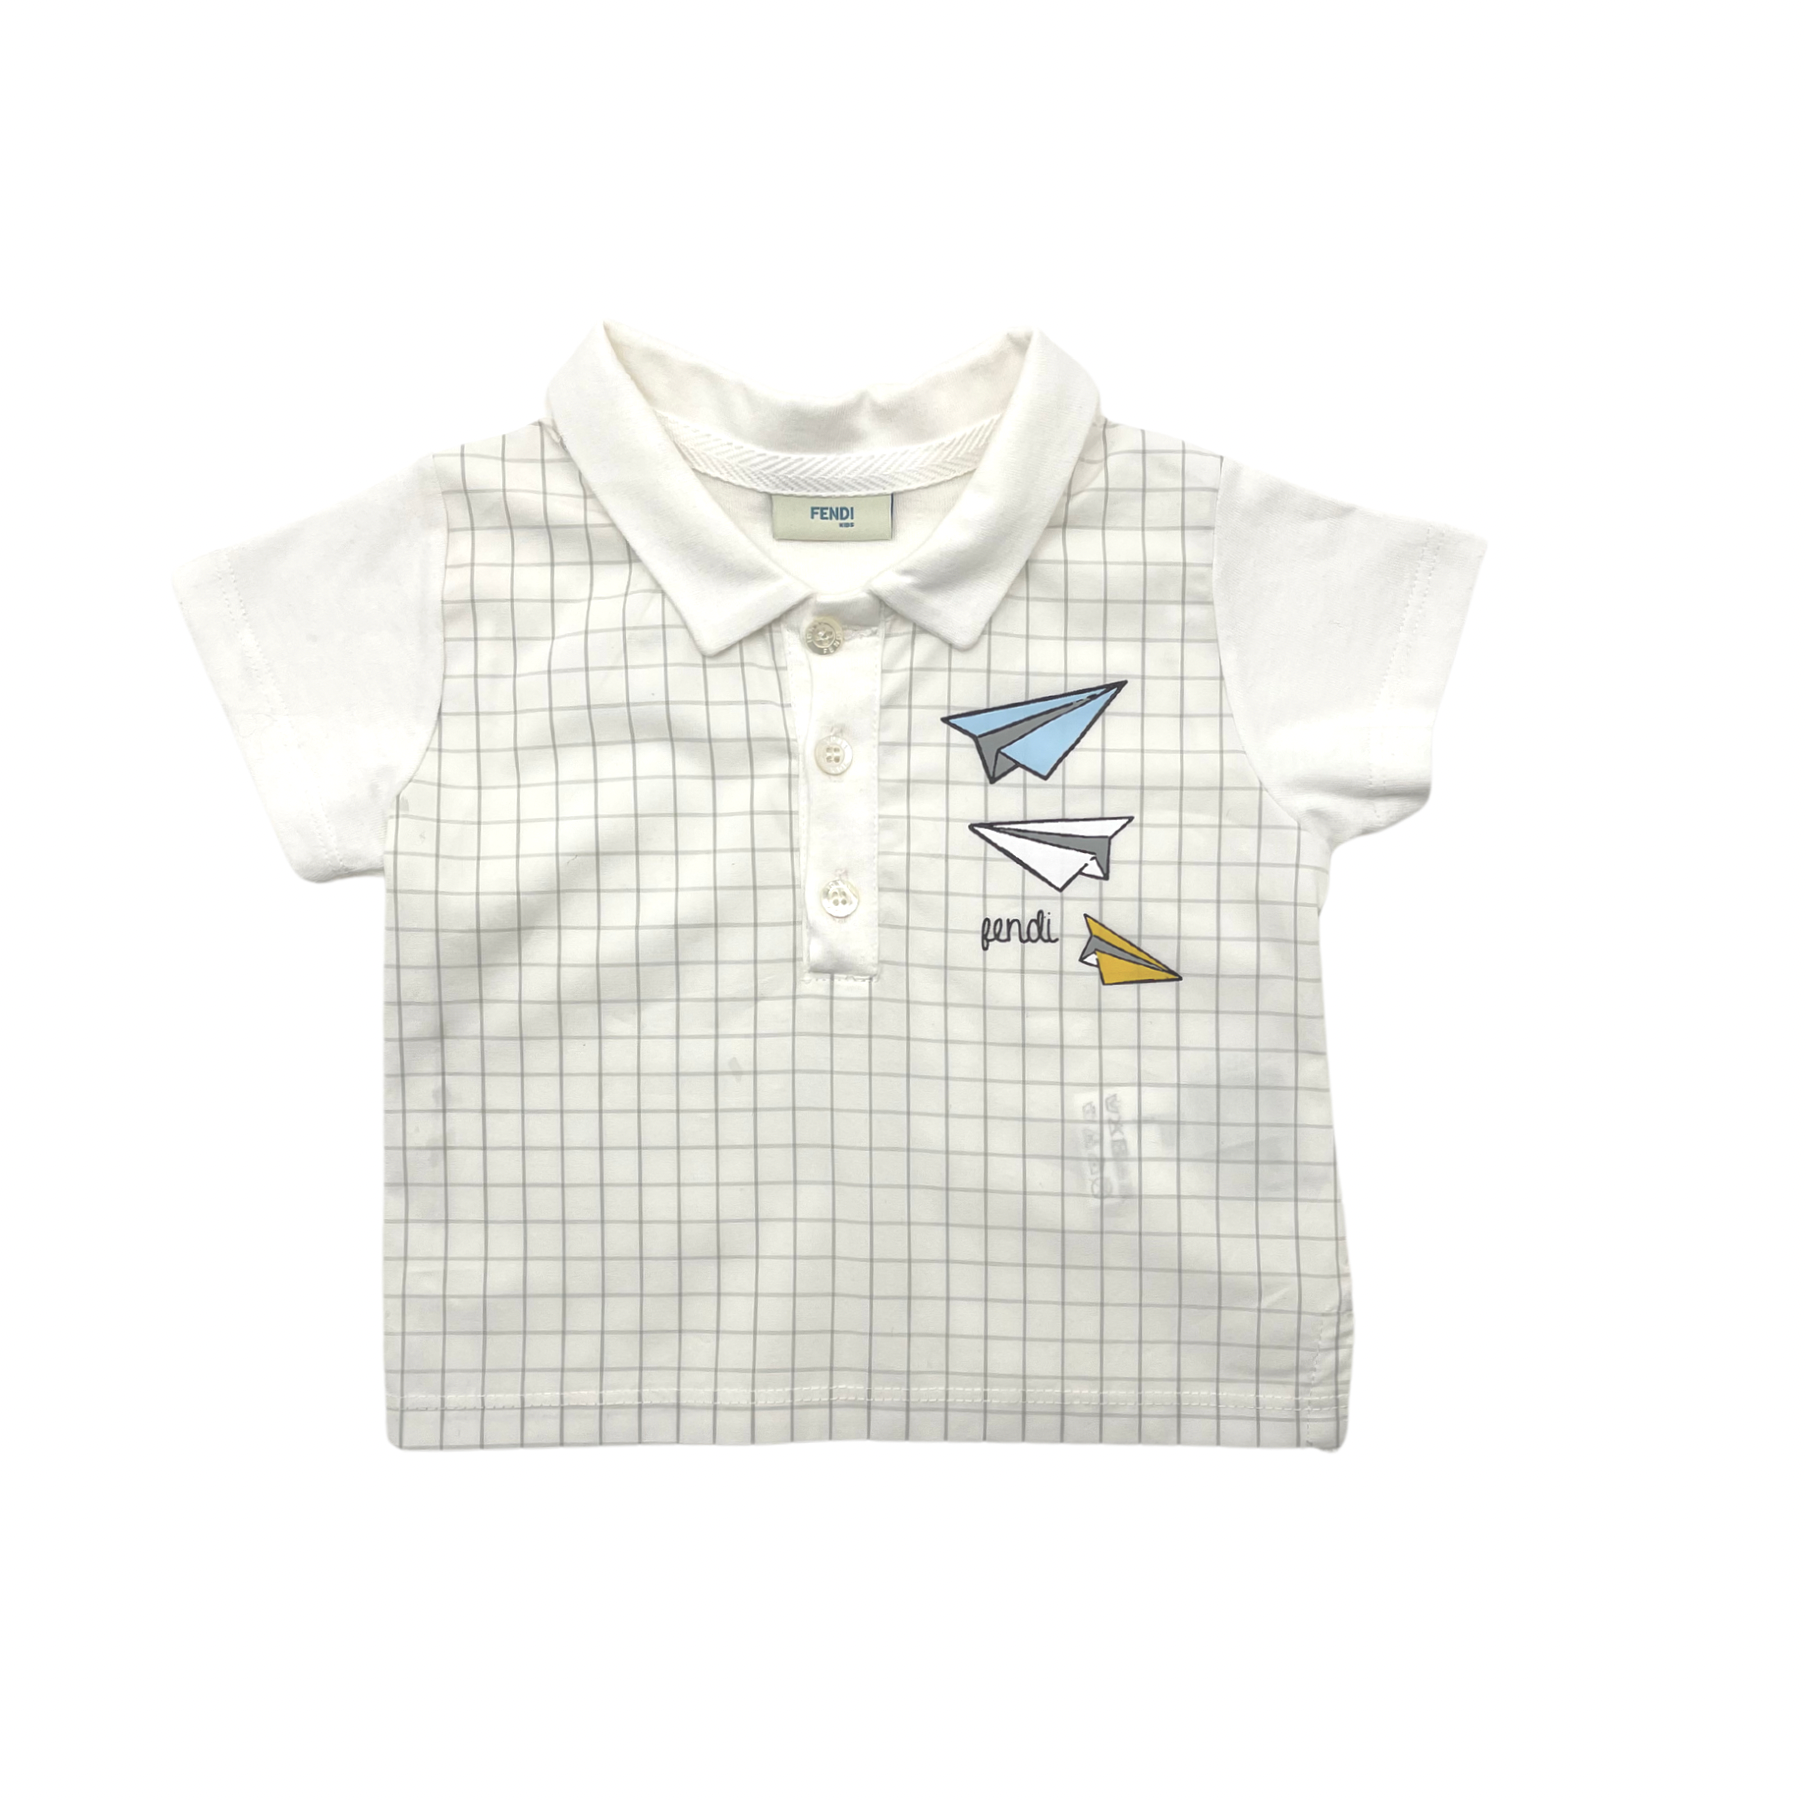 FENDI - Paper plane printed polo shirt - 3 months